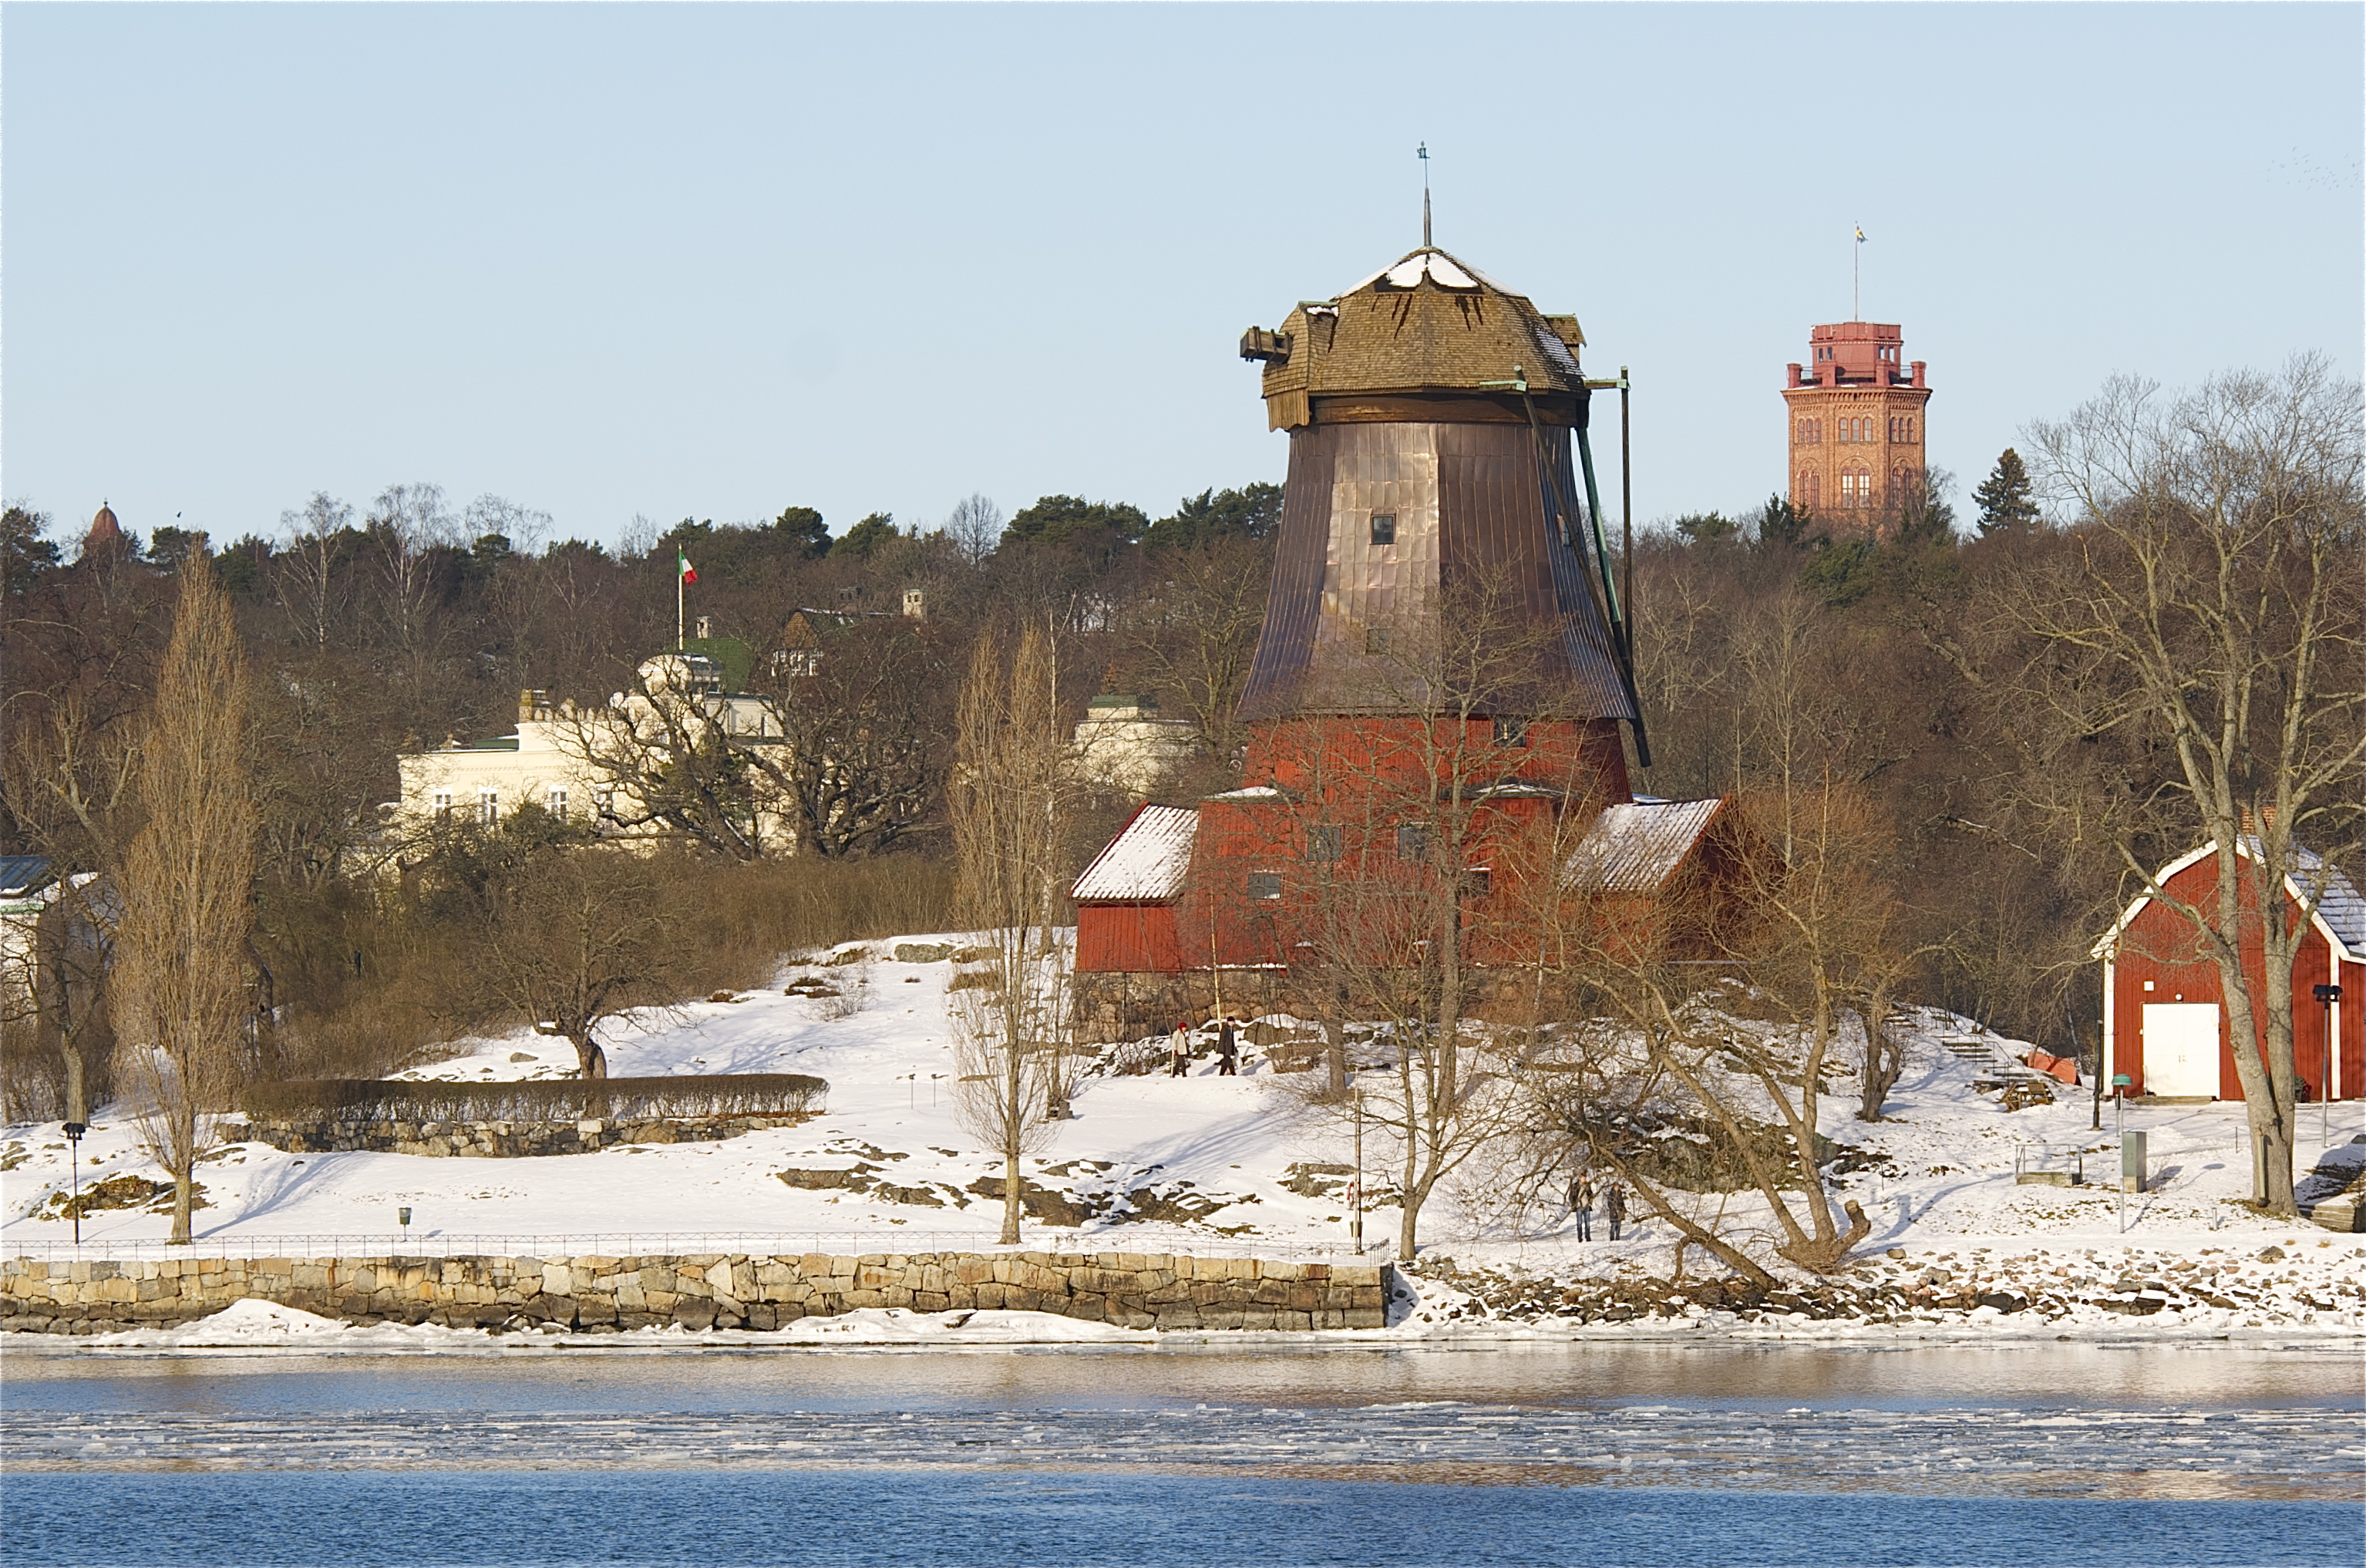 Oljekvarnen February 2012